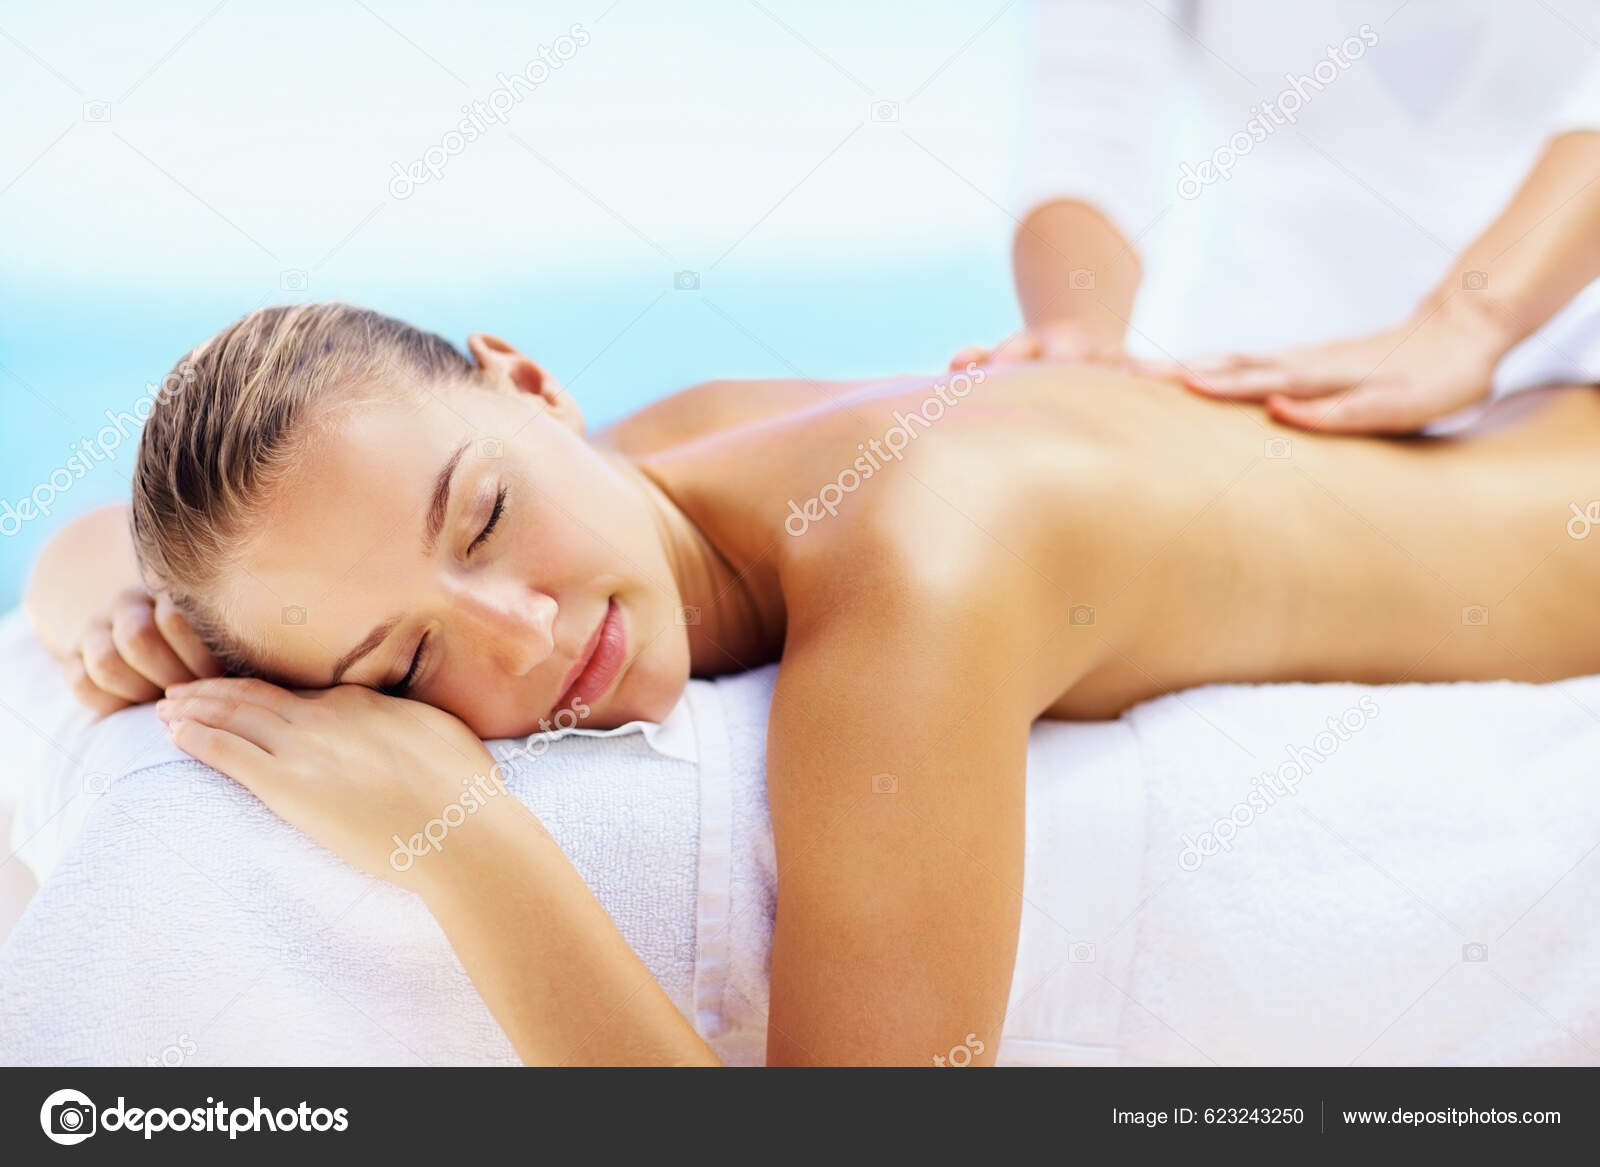 Nude full massage